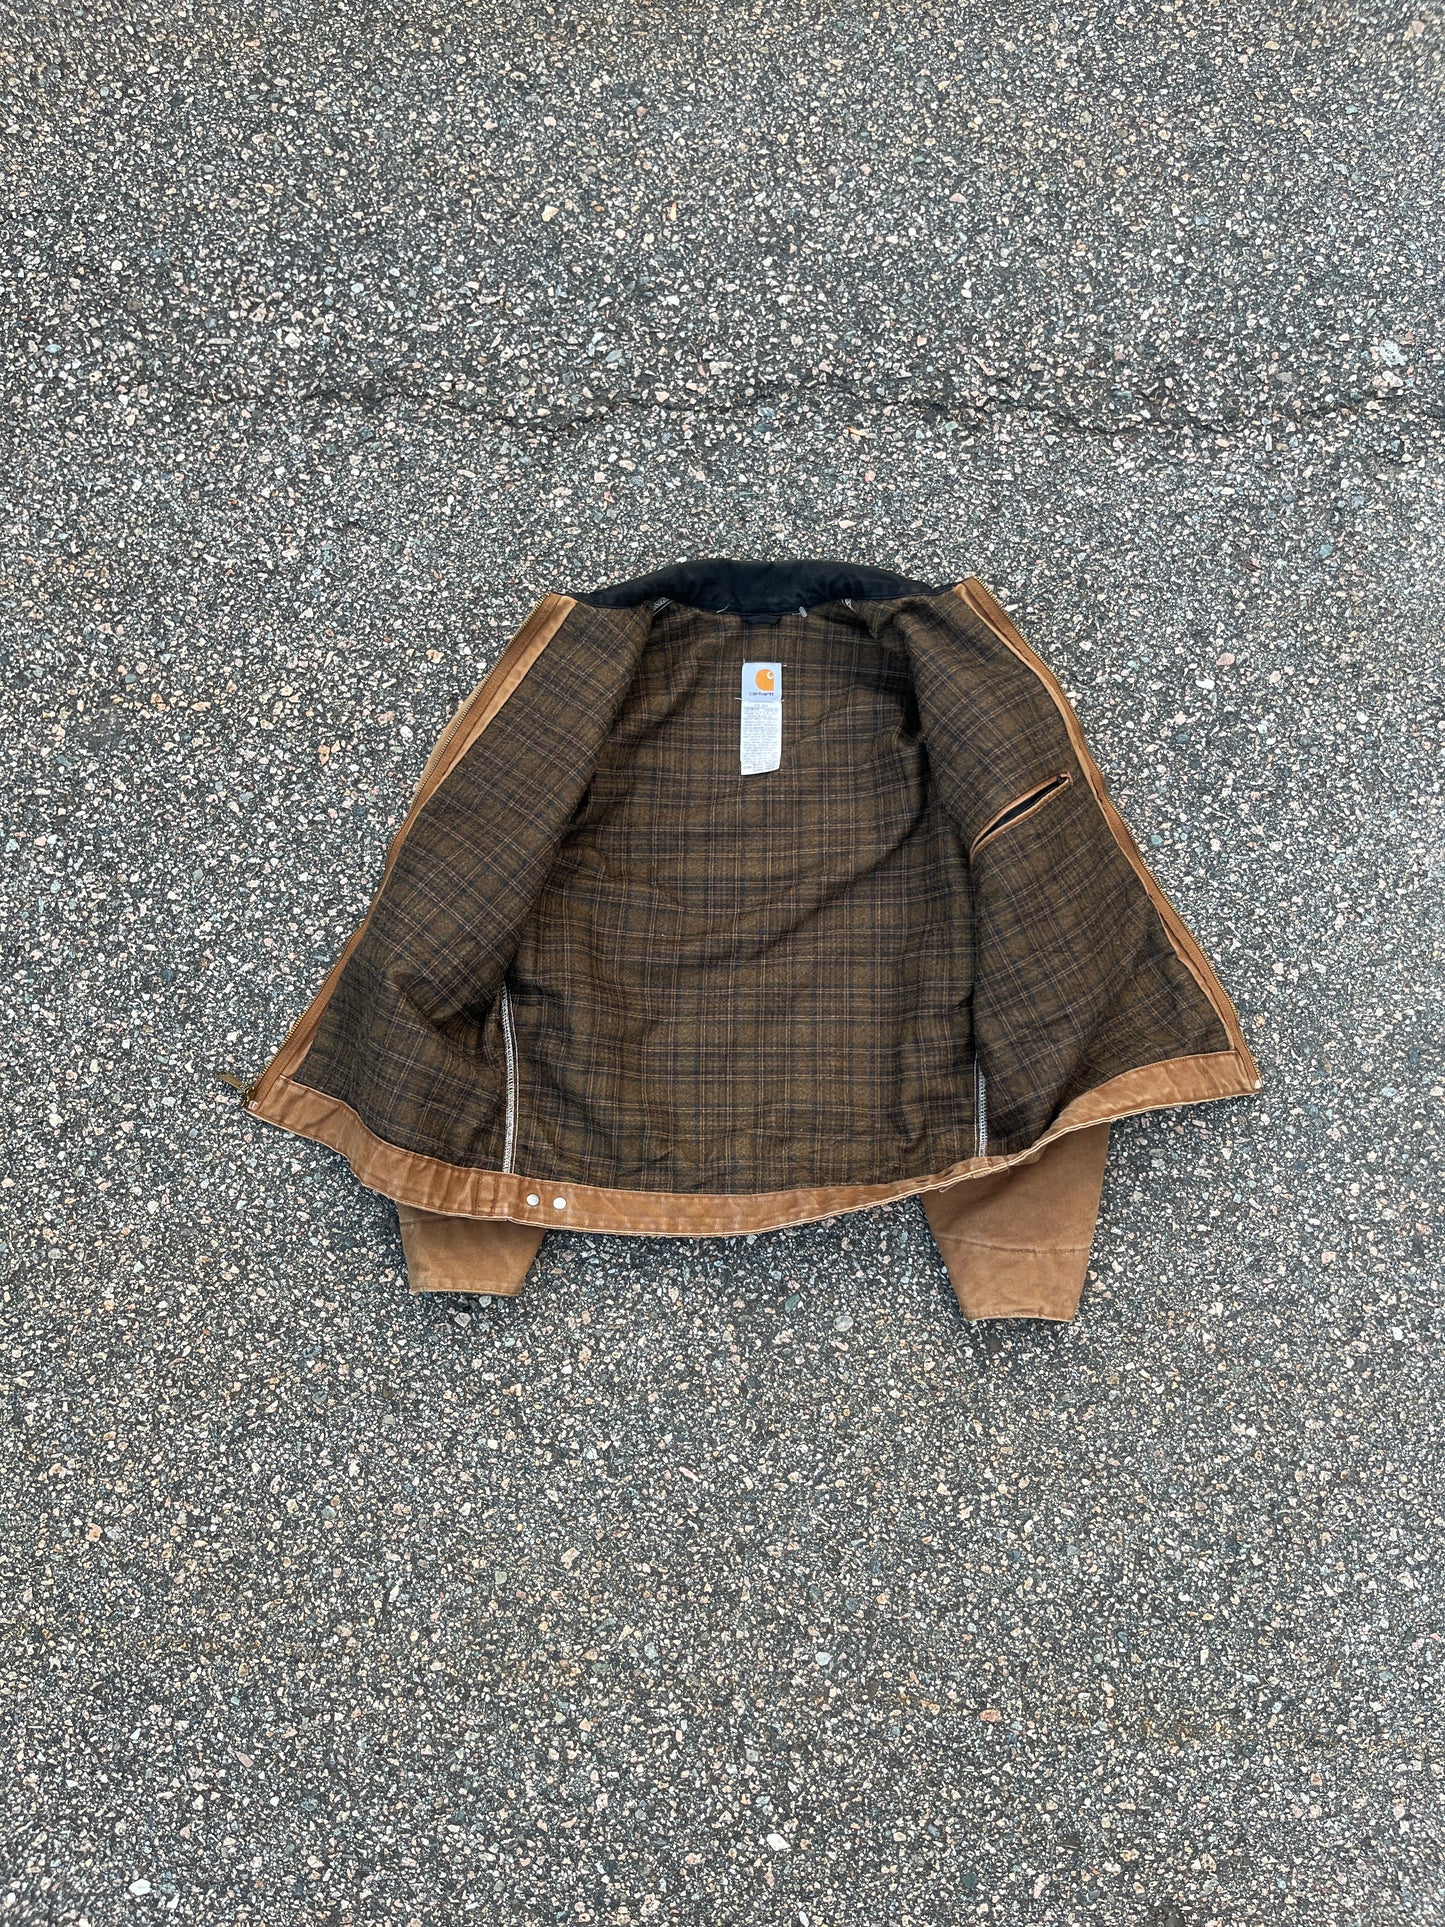 Faded Brown Carhartt Detroit Jacket - Medium